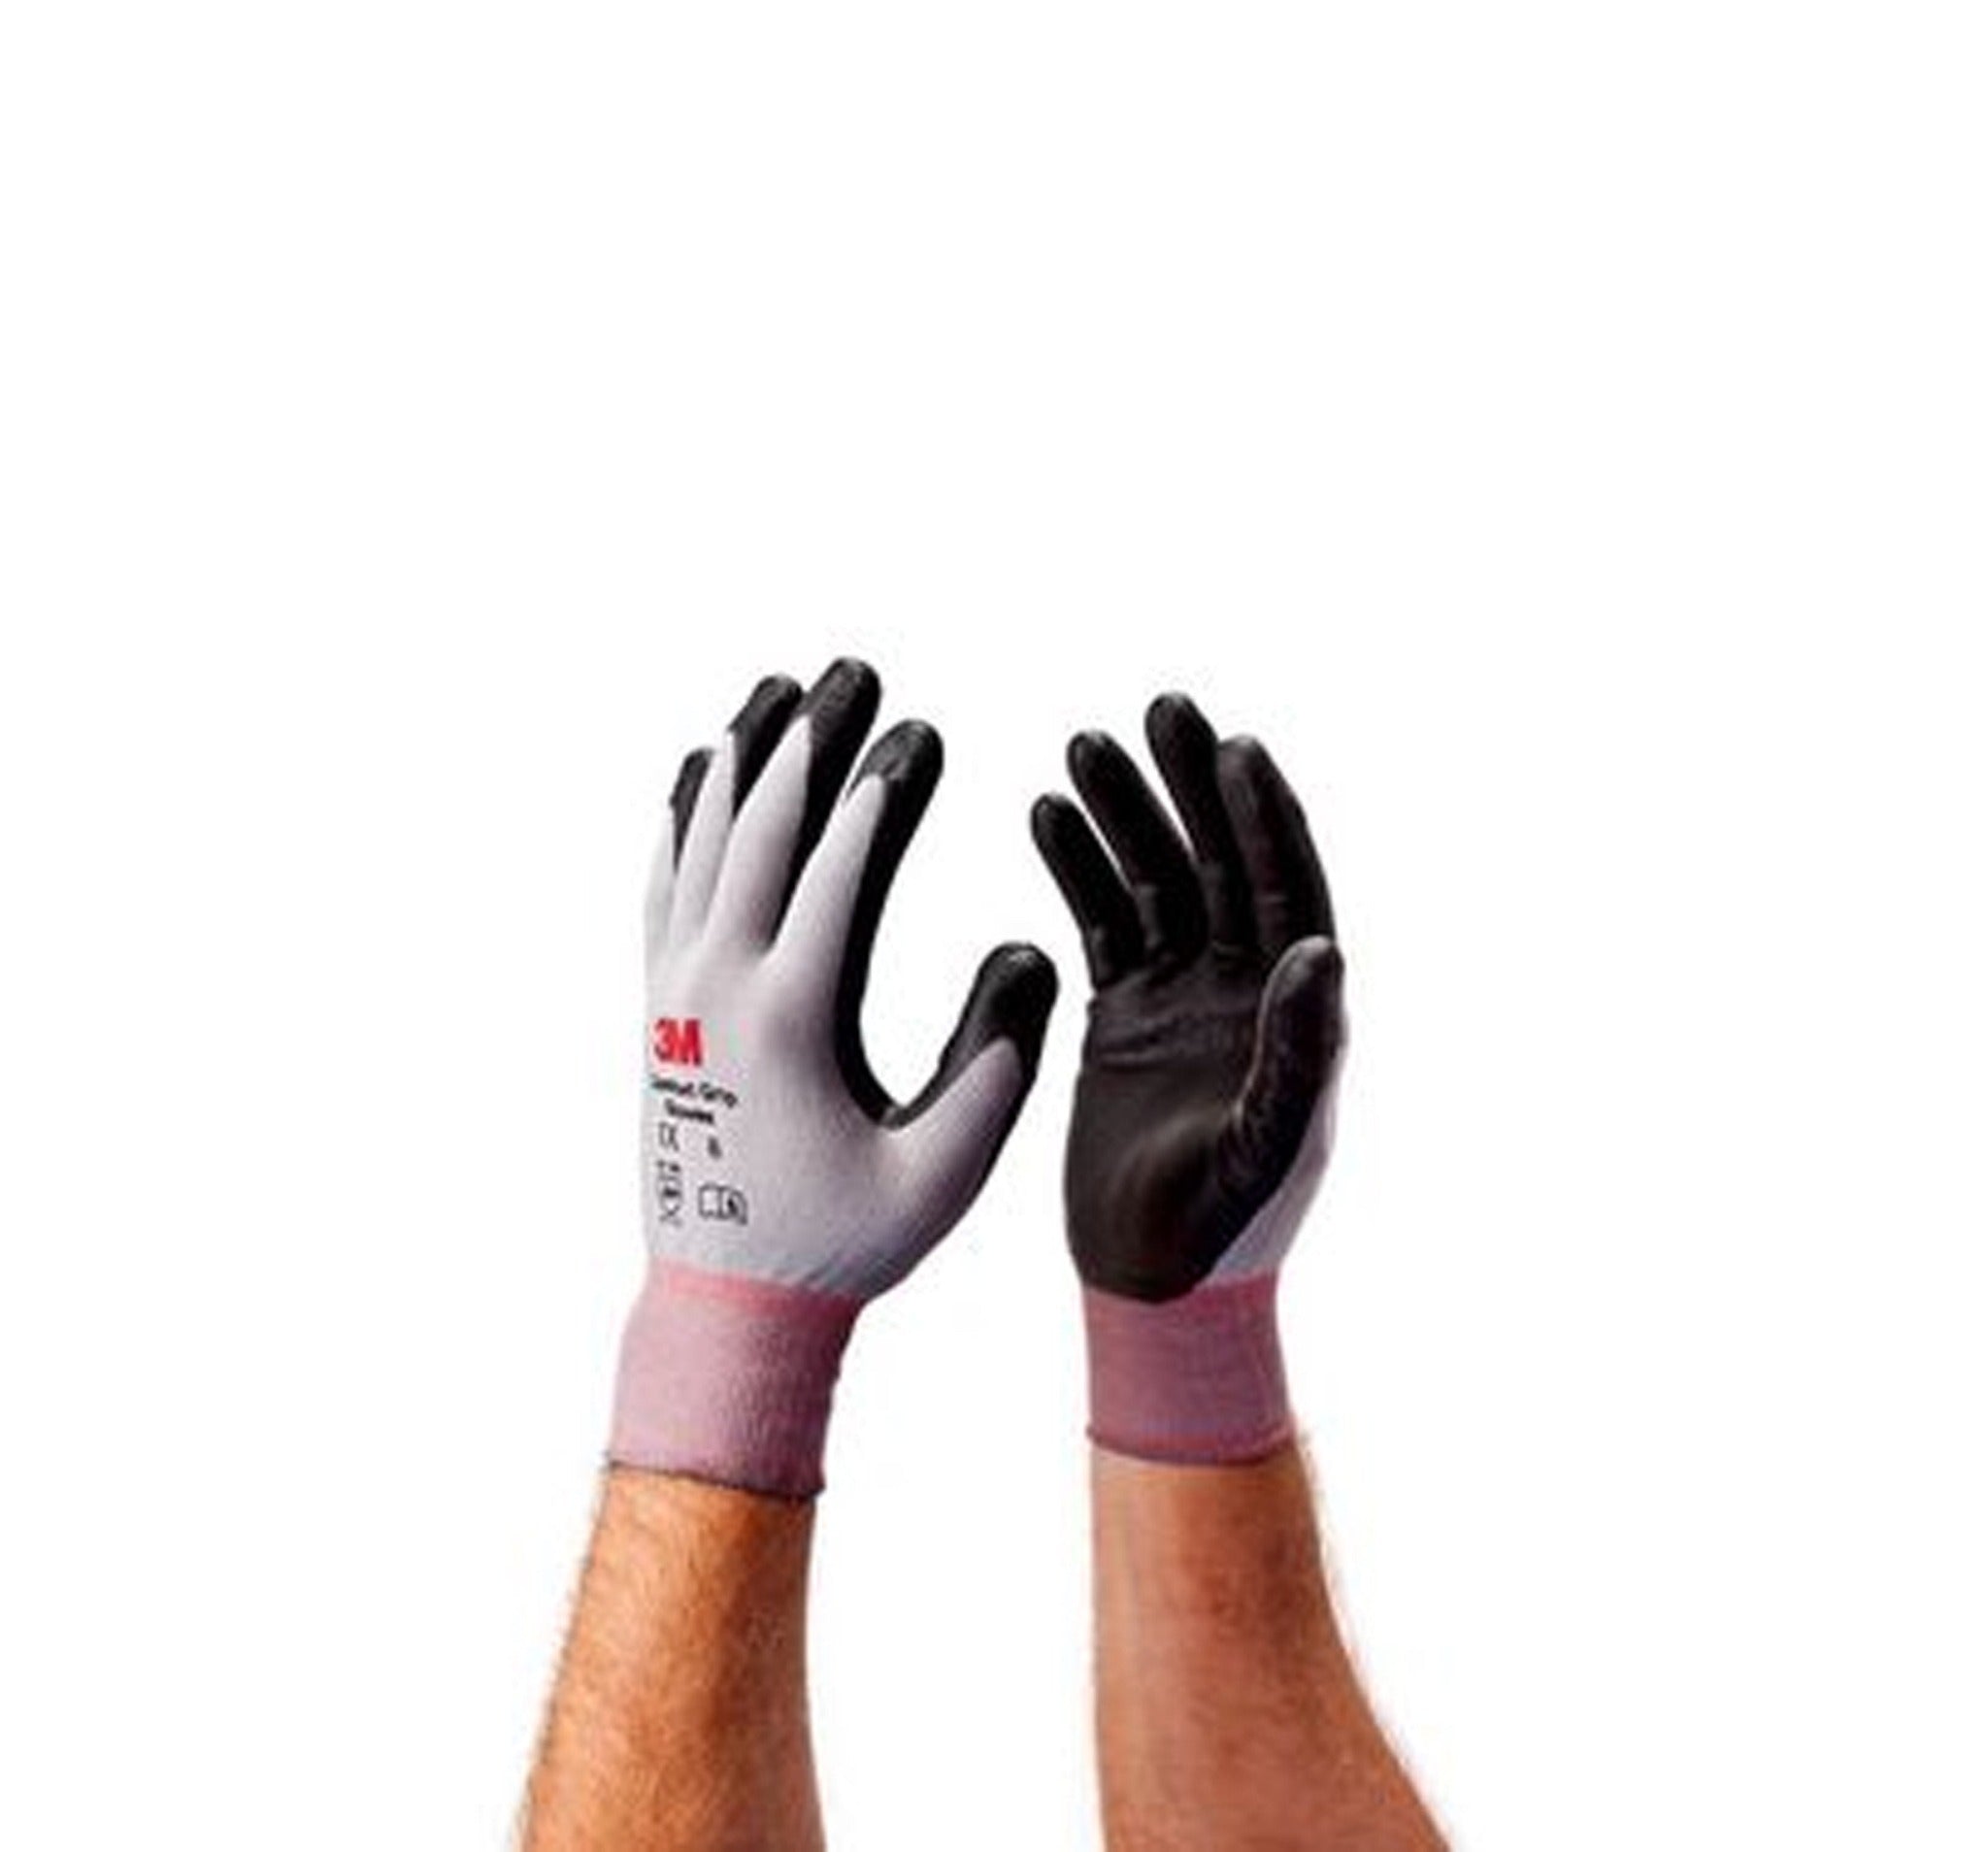 3M Comfort Grip Glove, General Use